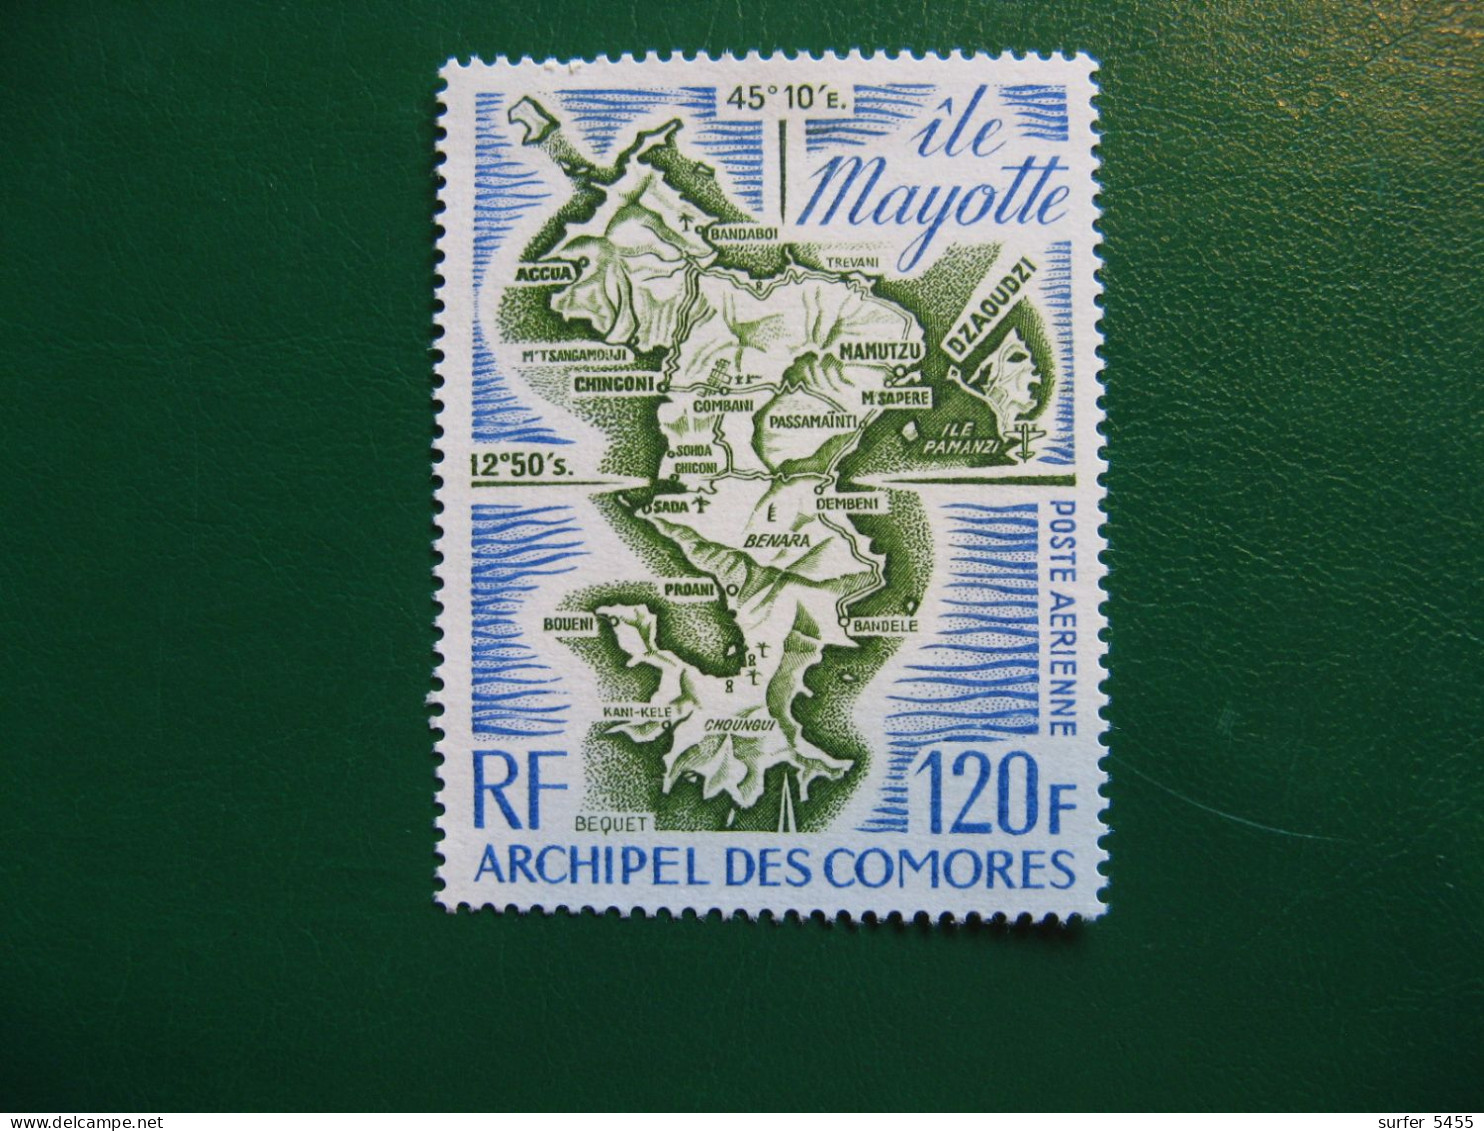 COMORES YVERT POSTE AERIENNE N° 61 TIMBRE NEUF** LUXE - MNH - COTE 12,00 EUROS - Ongebruikt